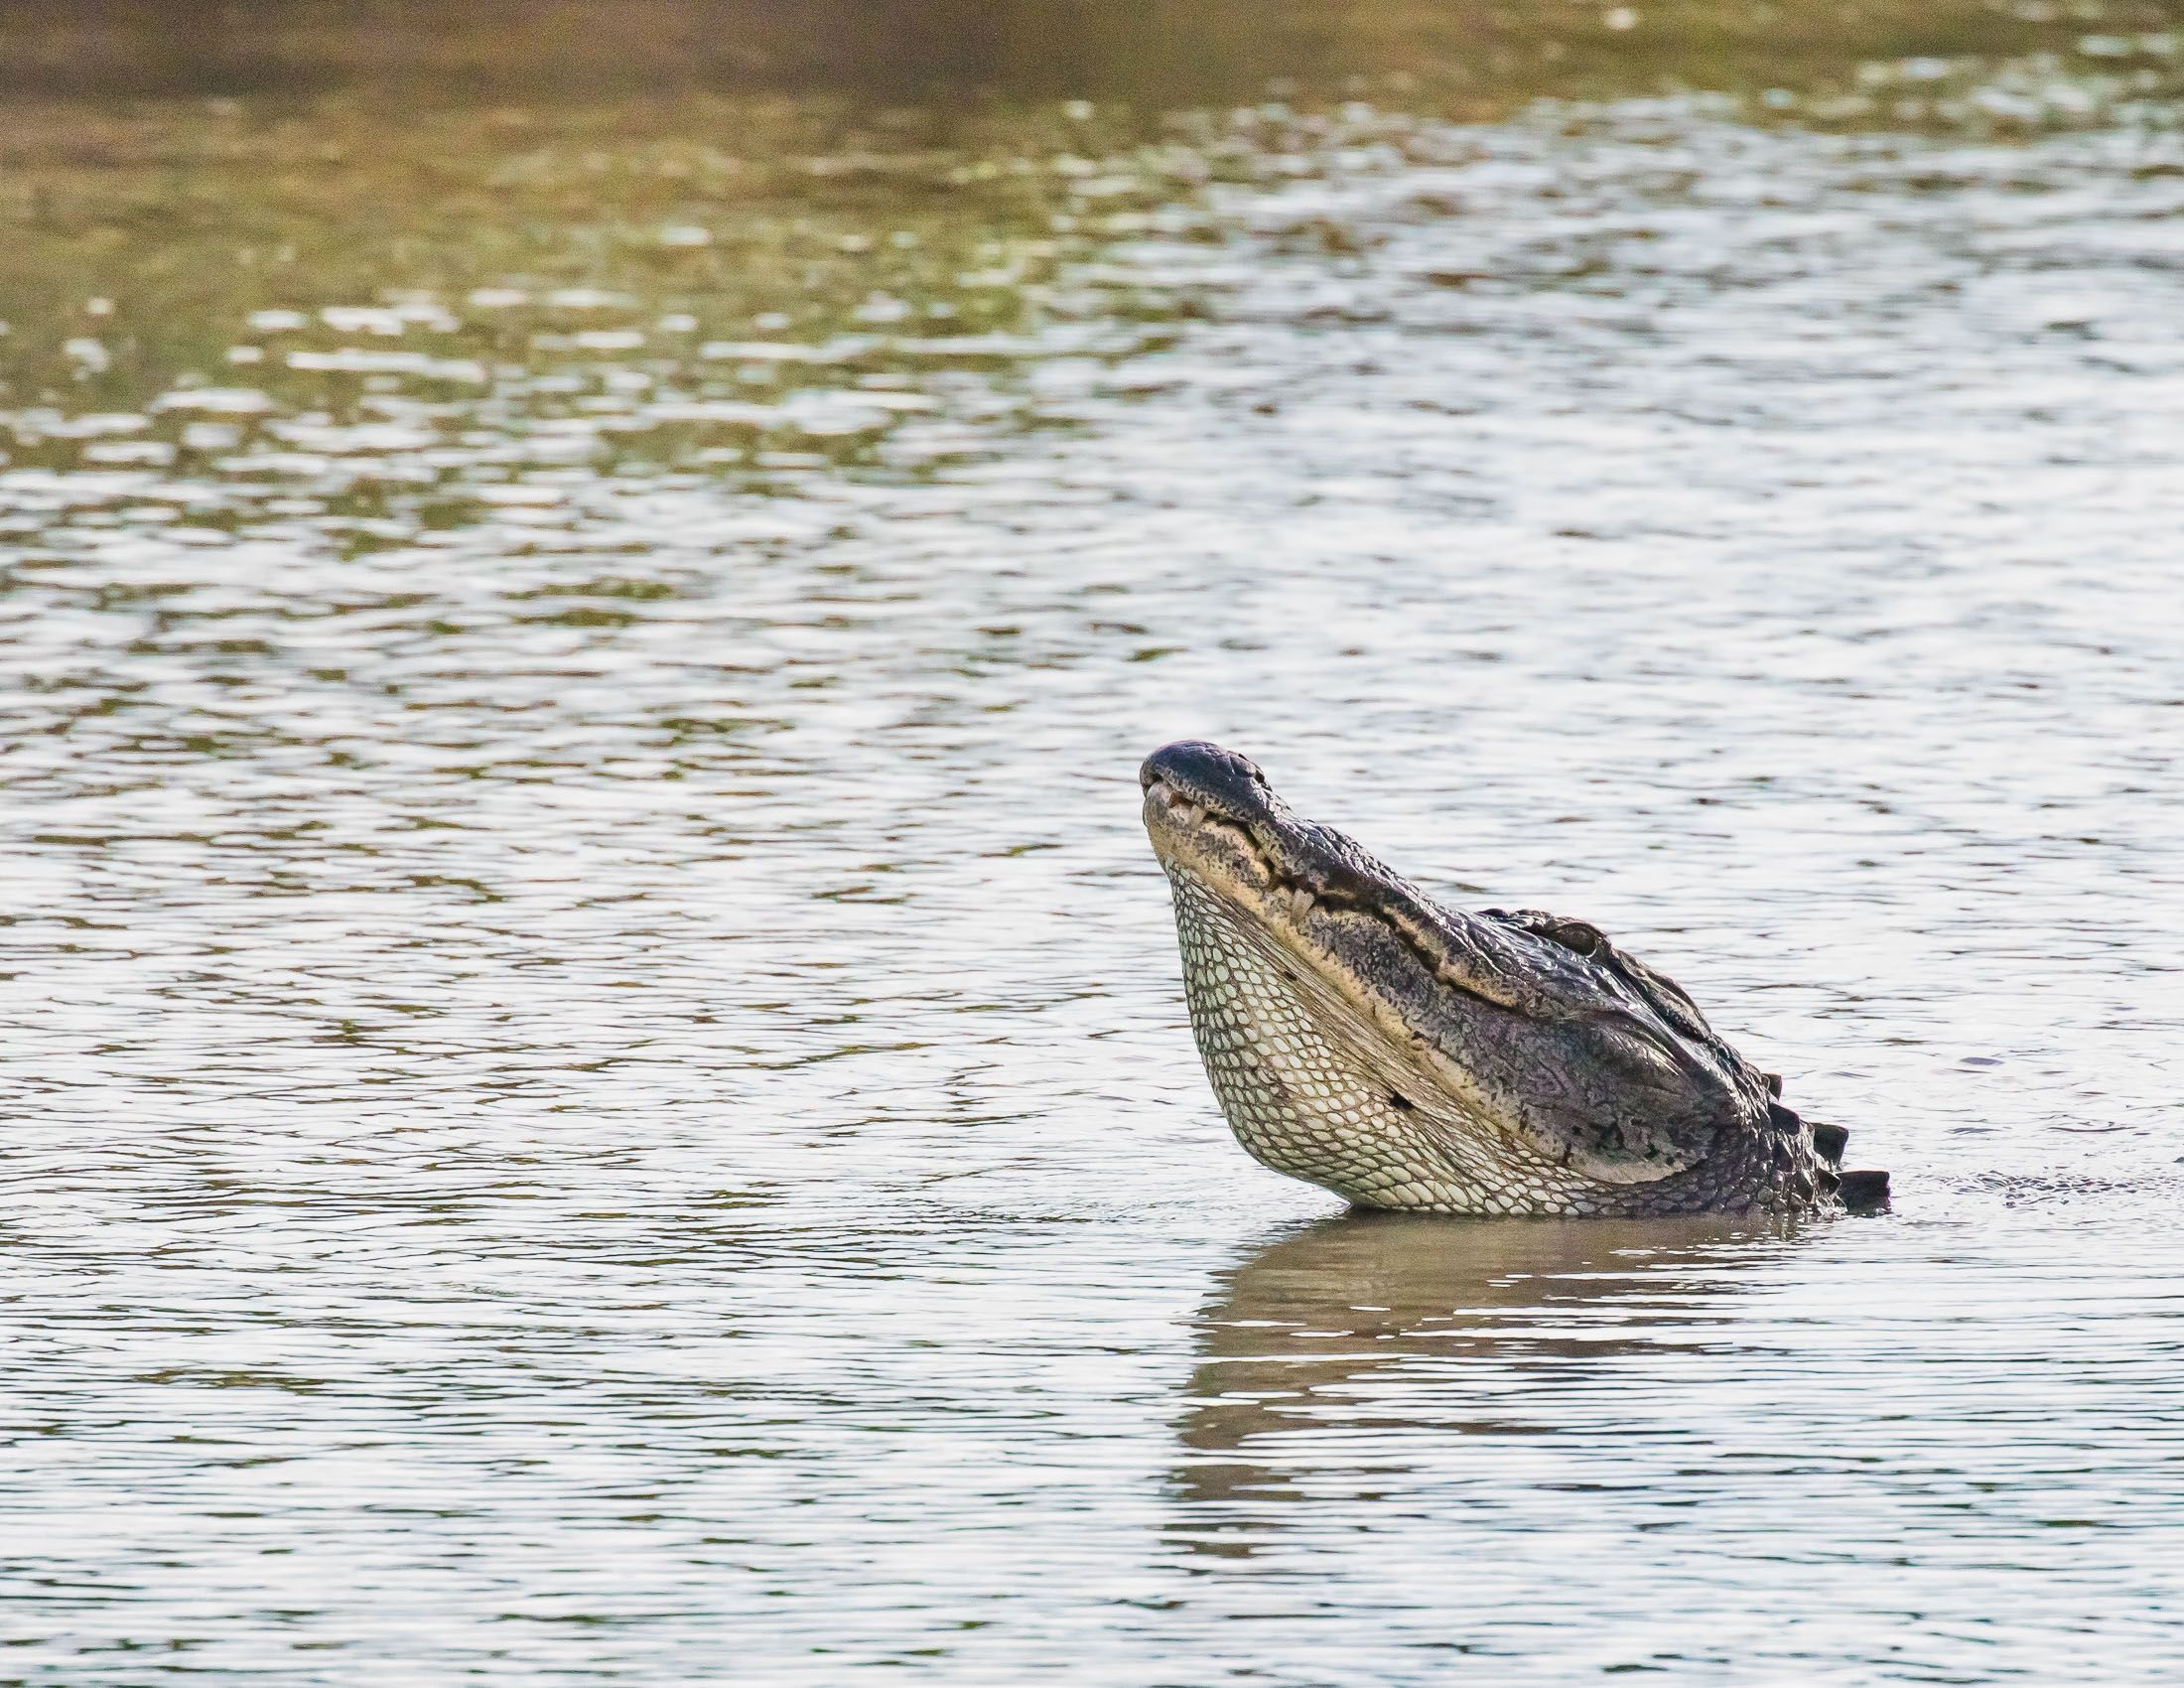 Alligators of Ace Basin, South Carolina-15.jpg